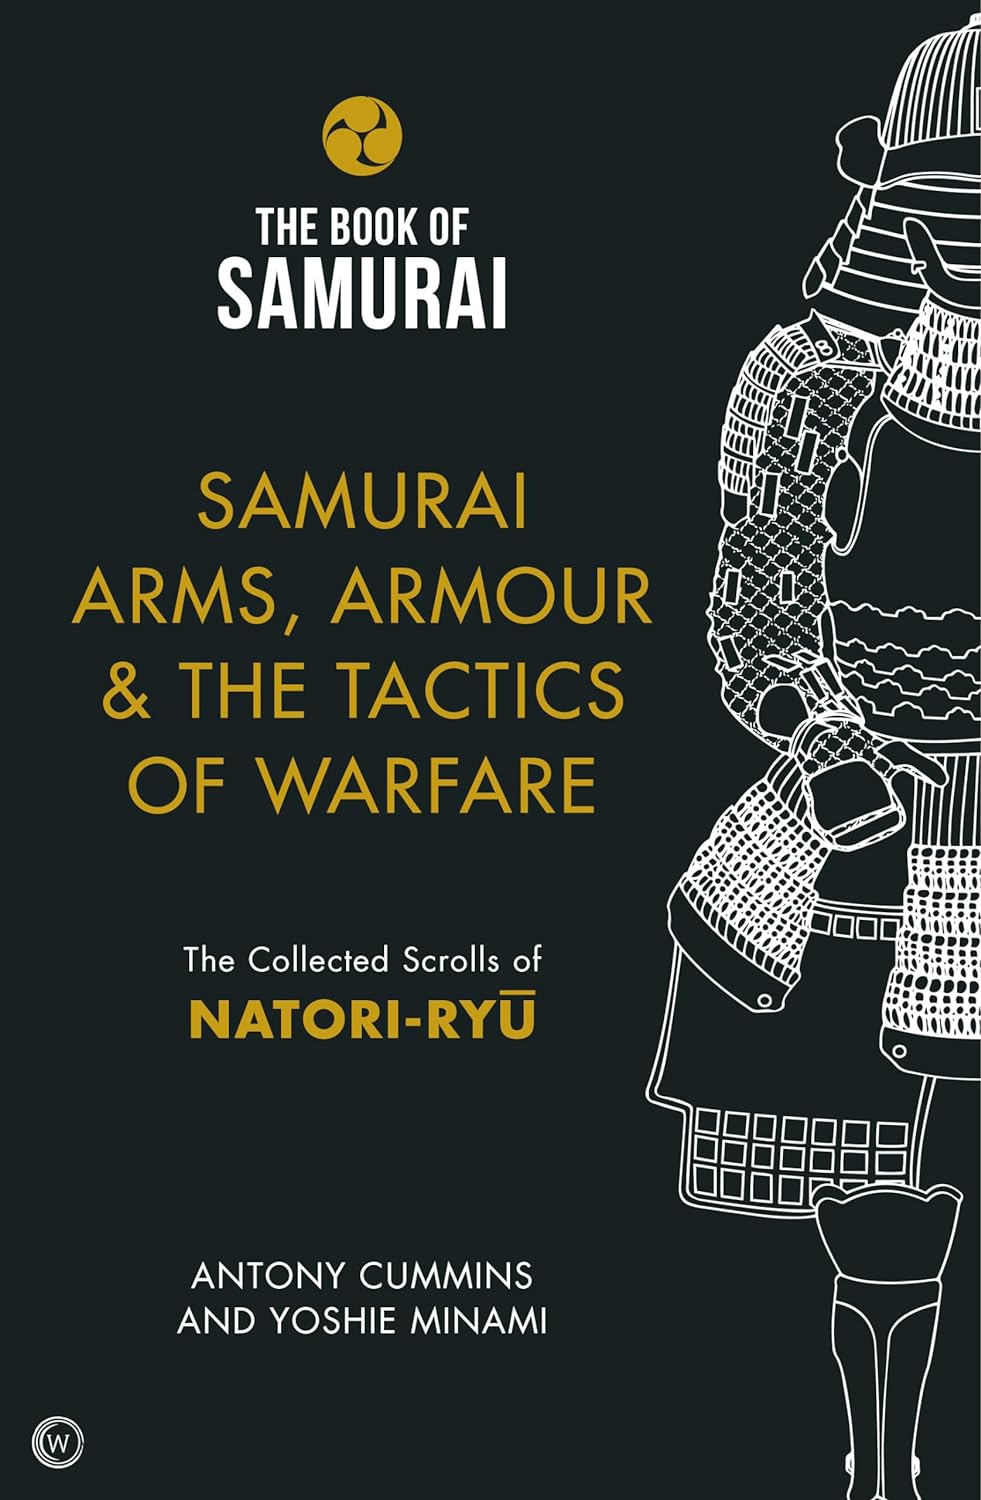 Samurai Arms, Armour & the Tactics of Warfare: The Collected Scrolls of Natori-Ryu (Book of Samurai) by Antony Cummins & Yoshie Manami (Hardcover)